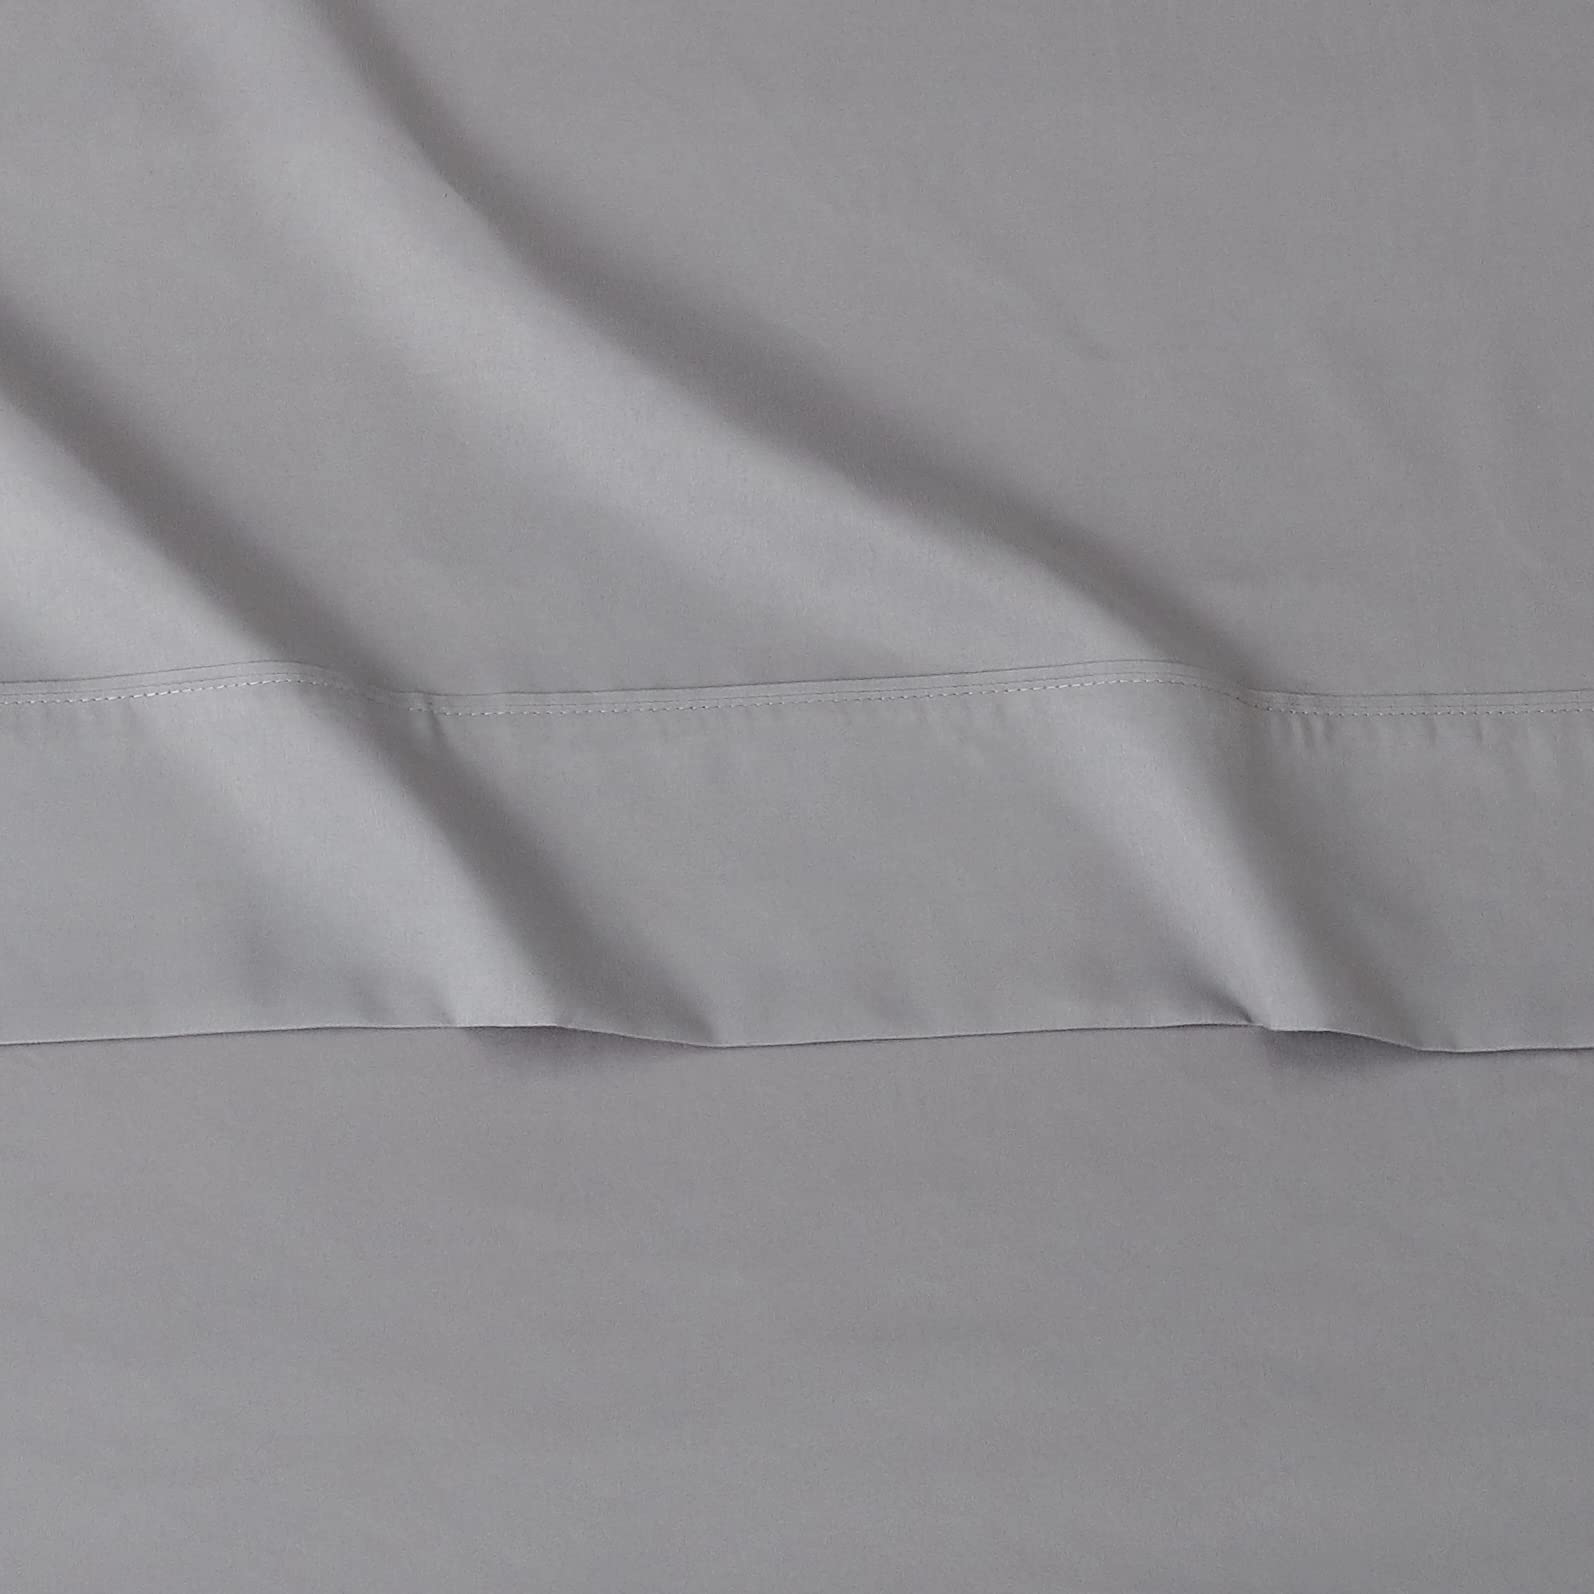 Amazon Basics Lightweight Super Soft Easy Care Microfiber Bed Sheet Set with 14-Inch Deep Pockets - Queen, Dark Gray